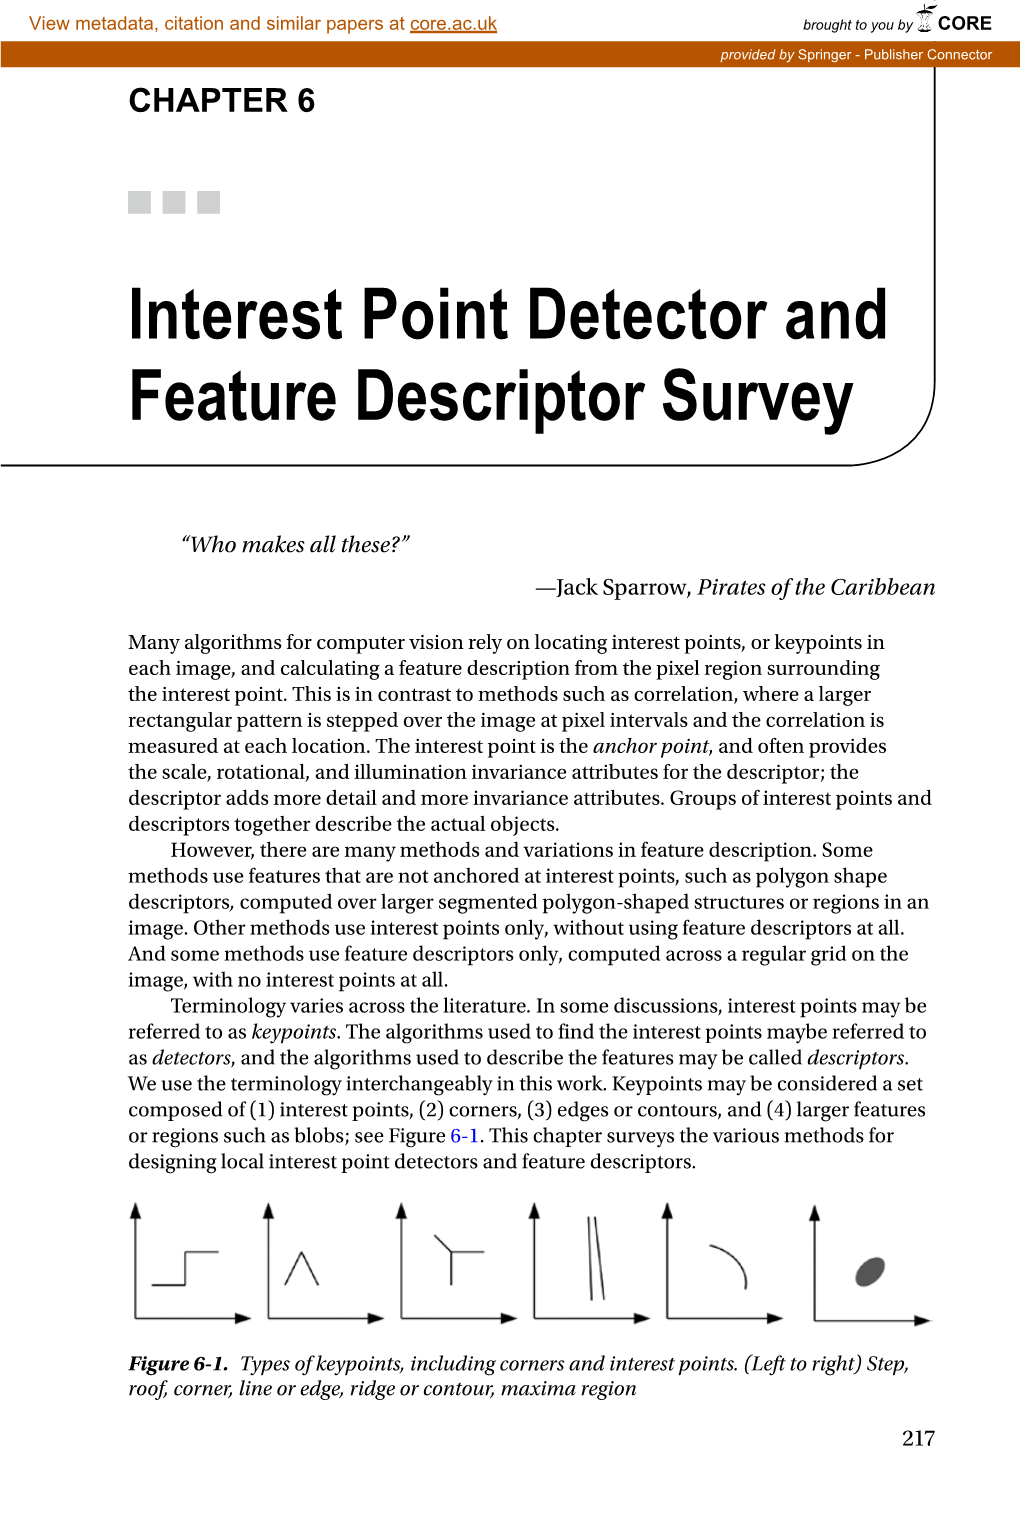 Interest Point Detector and Feature Descriptor Survey